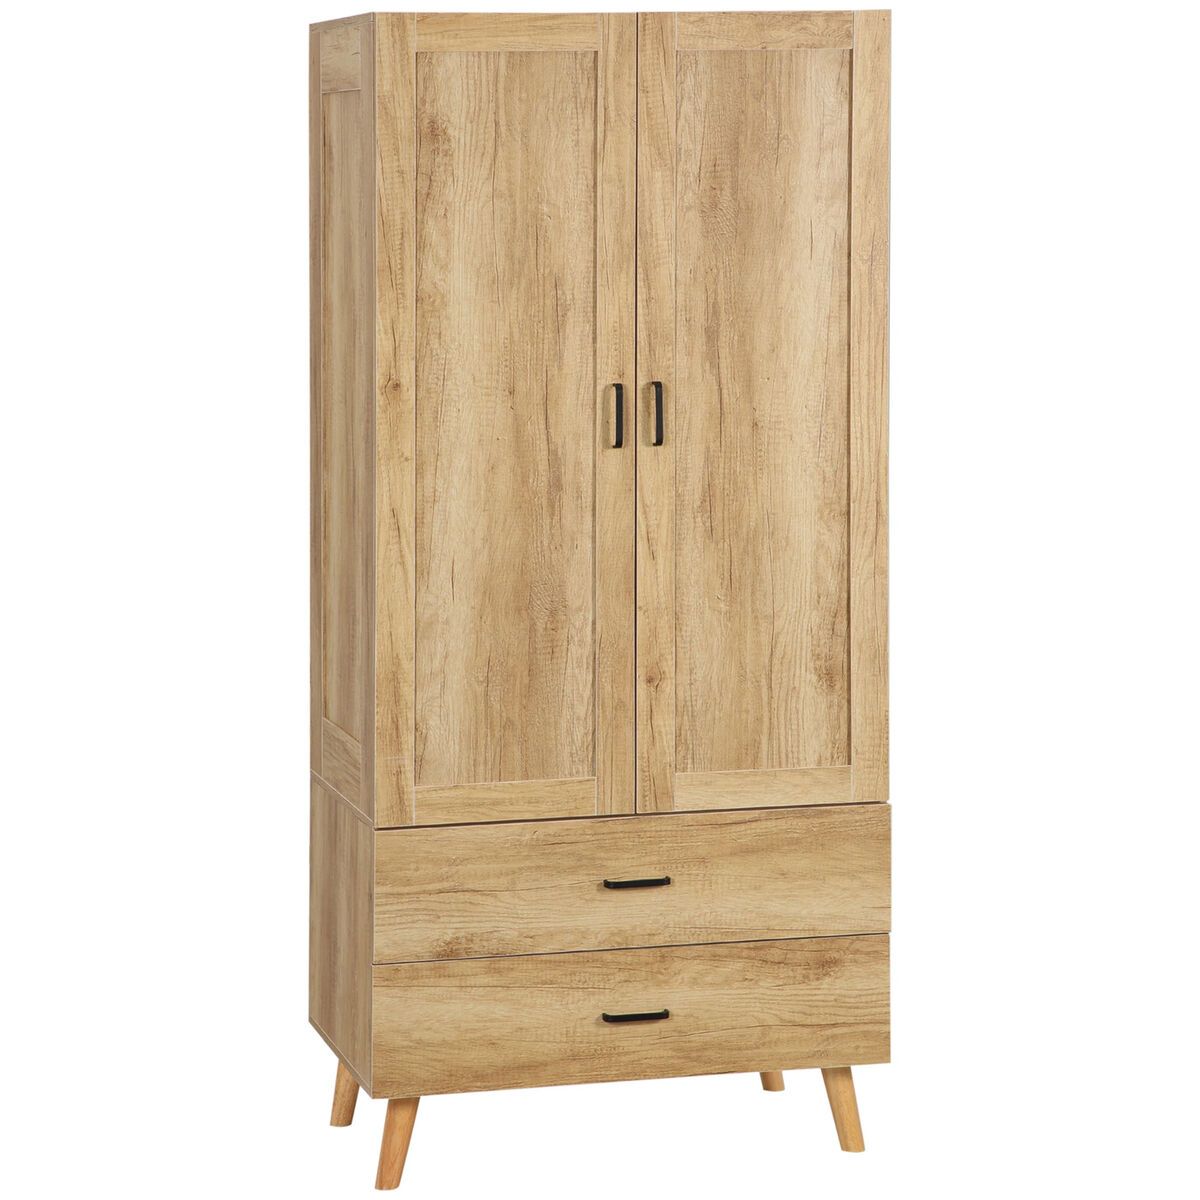 Wooden Wardrobe Double Door Closet Hanging Rail Clothing Storage Organiser  Shelf | Ebay Regarding Double Rail Oak Wardrobes (View 2 of 15)